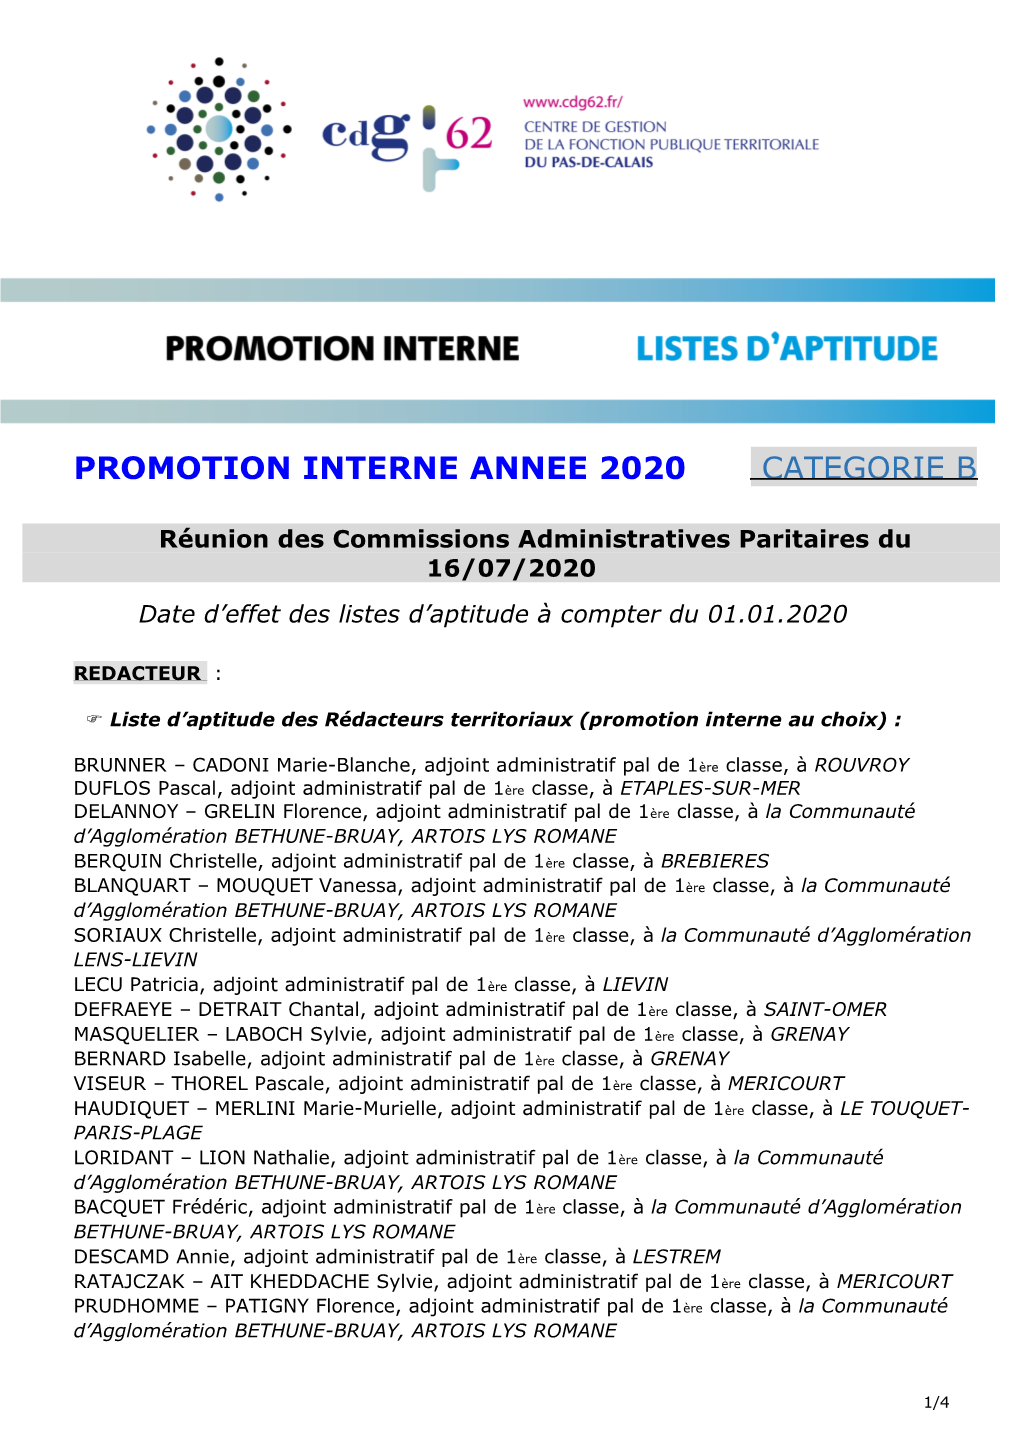 Promotion Interne Annee 2020 Categorie B